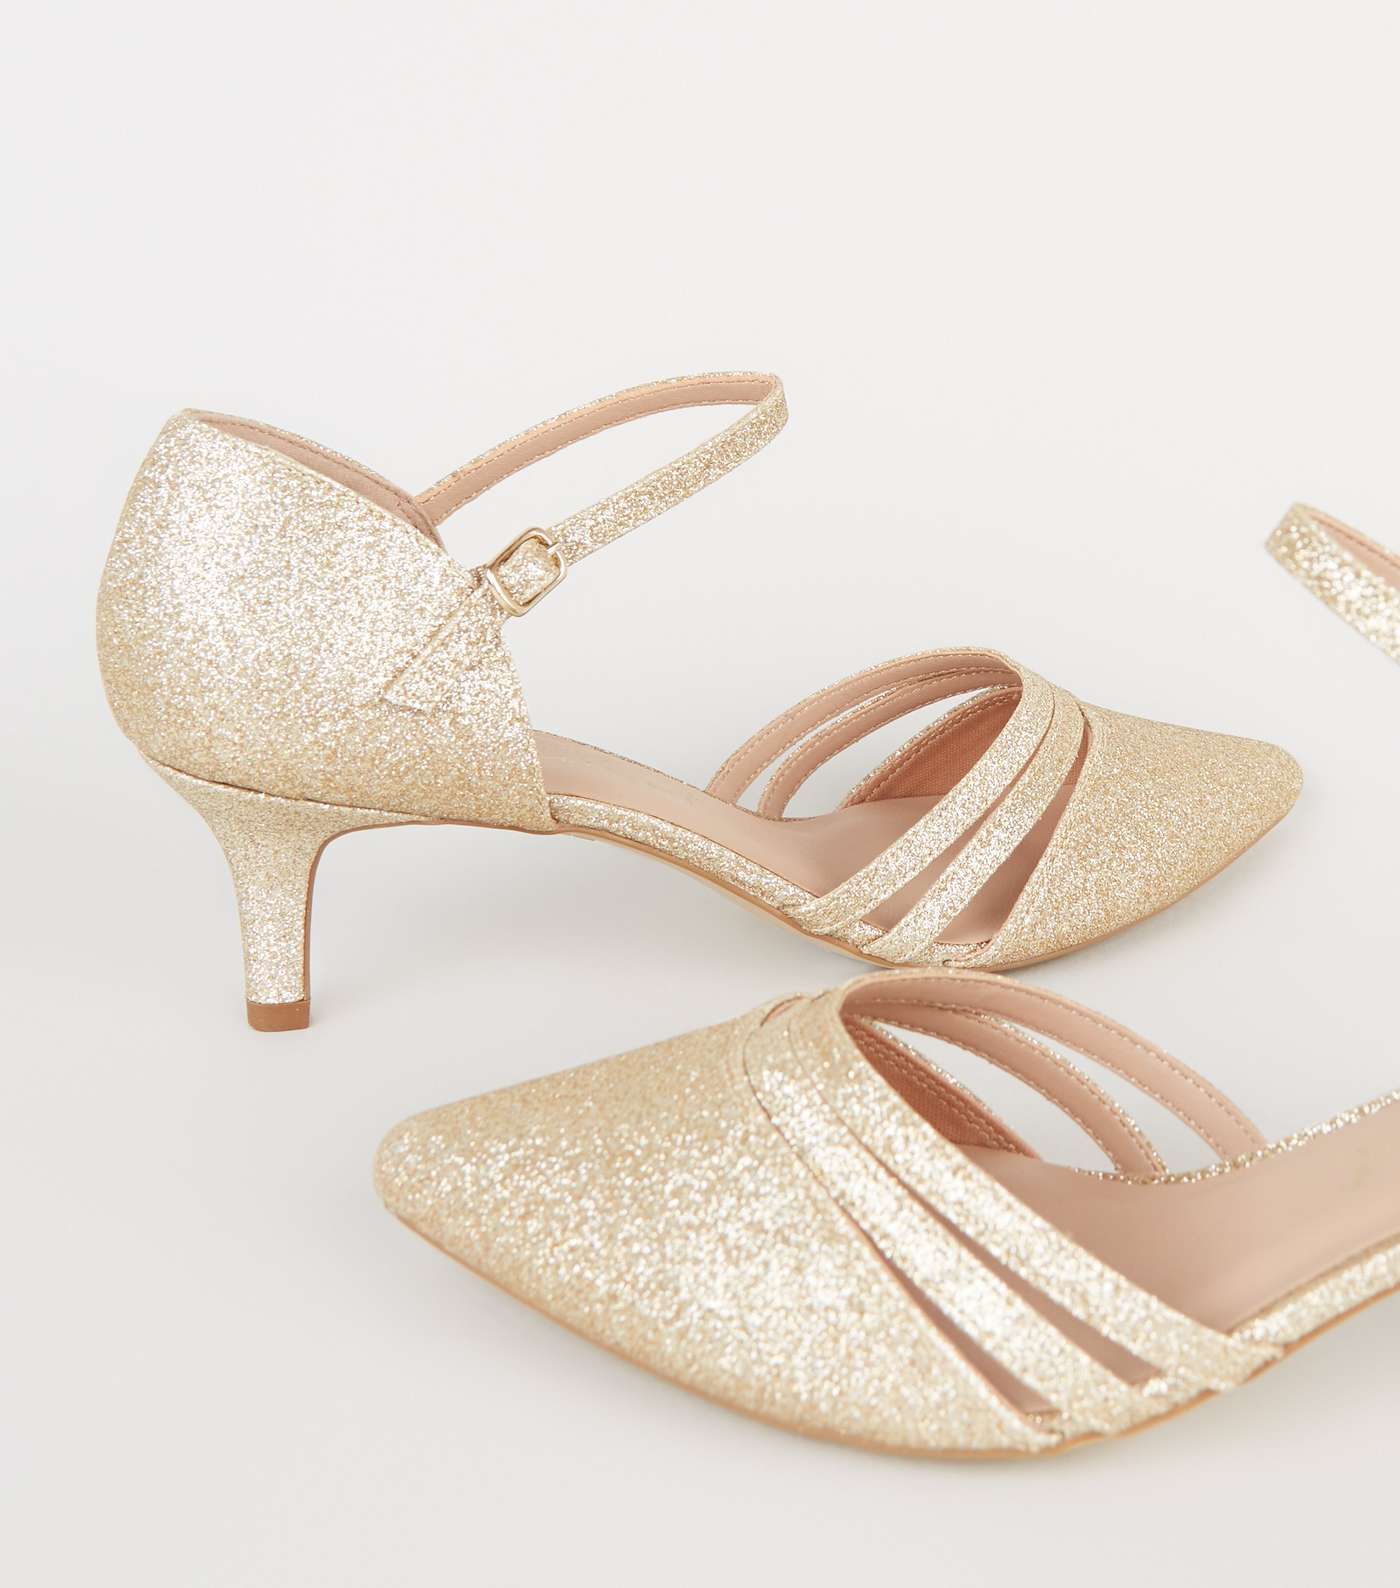 Wide Fit Gold Glitter Kitten Heel Court Shoes Image 4